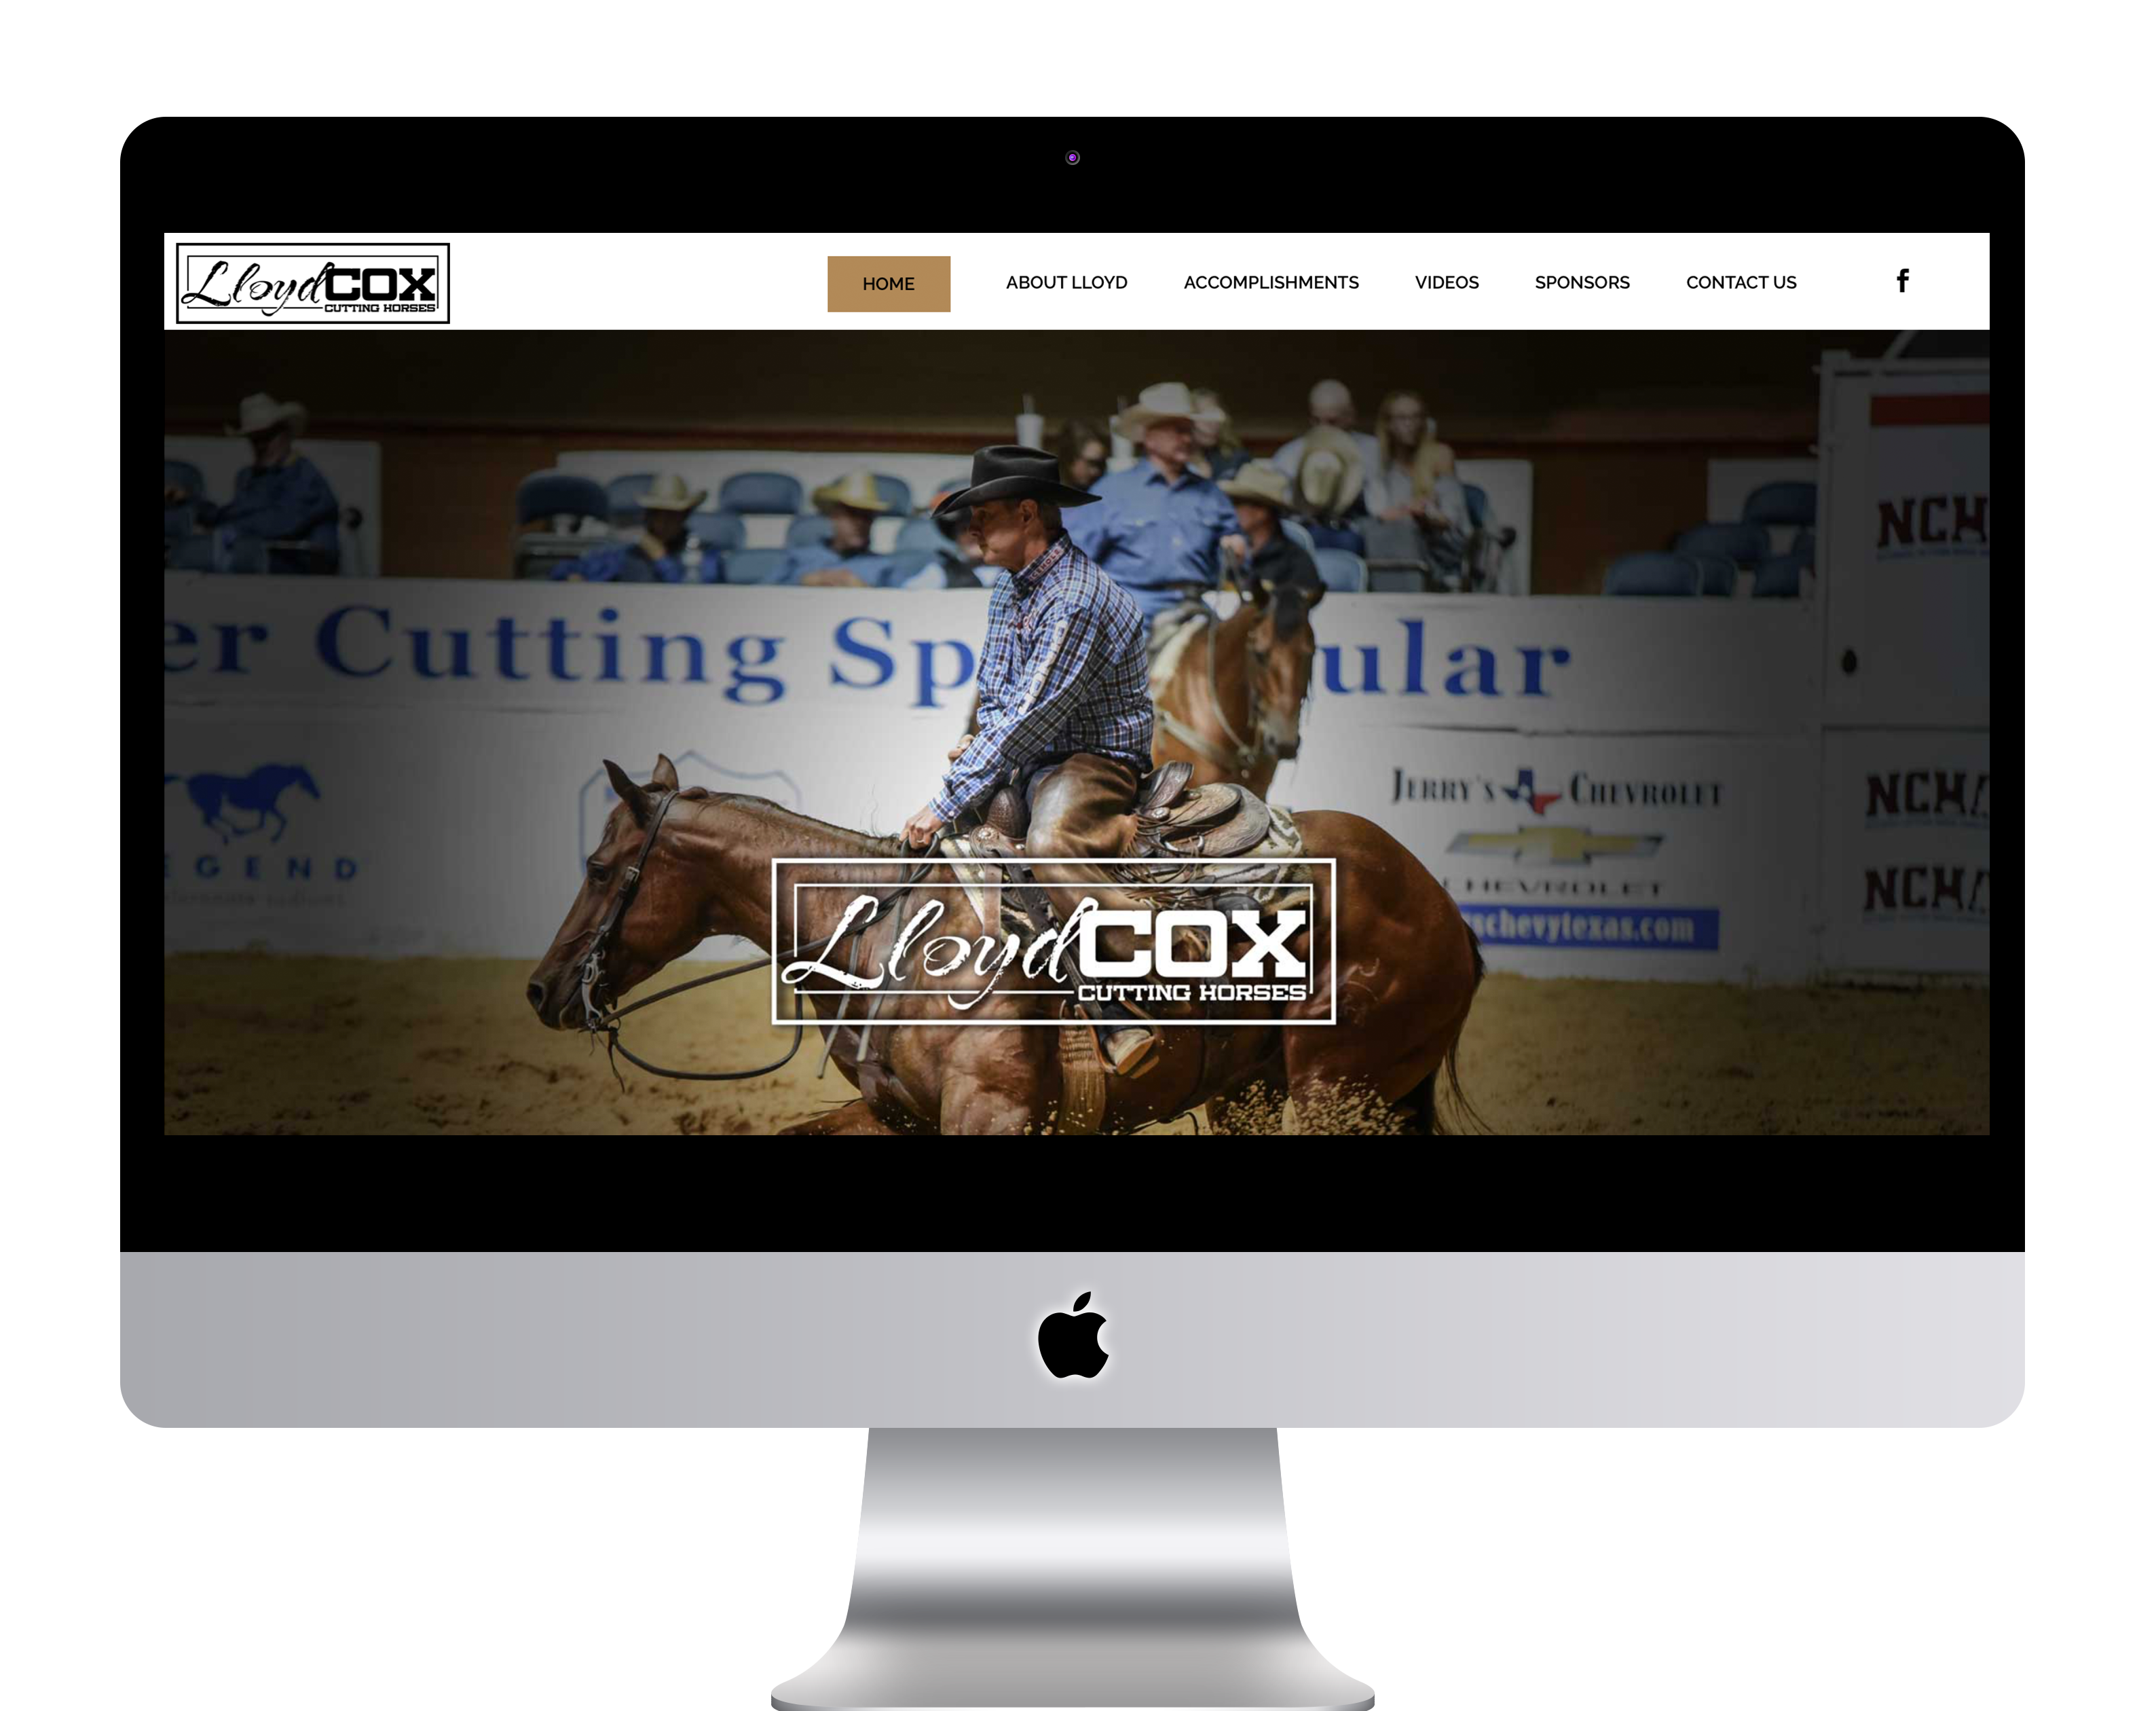 Lloyd Cox cutting horses hoe website design